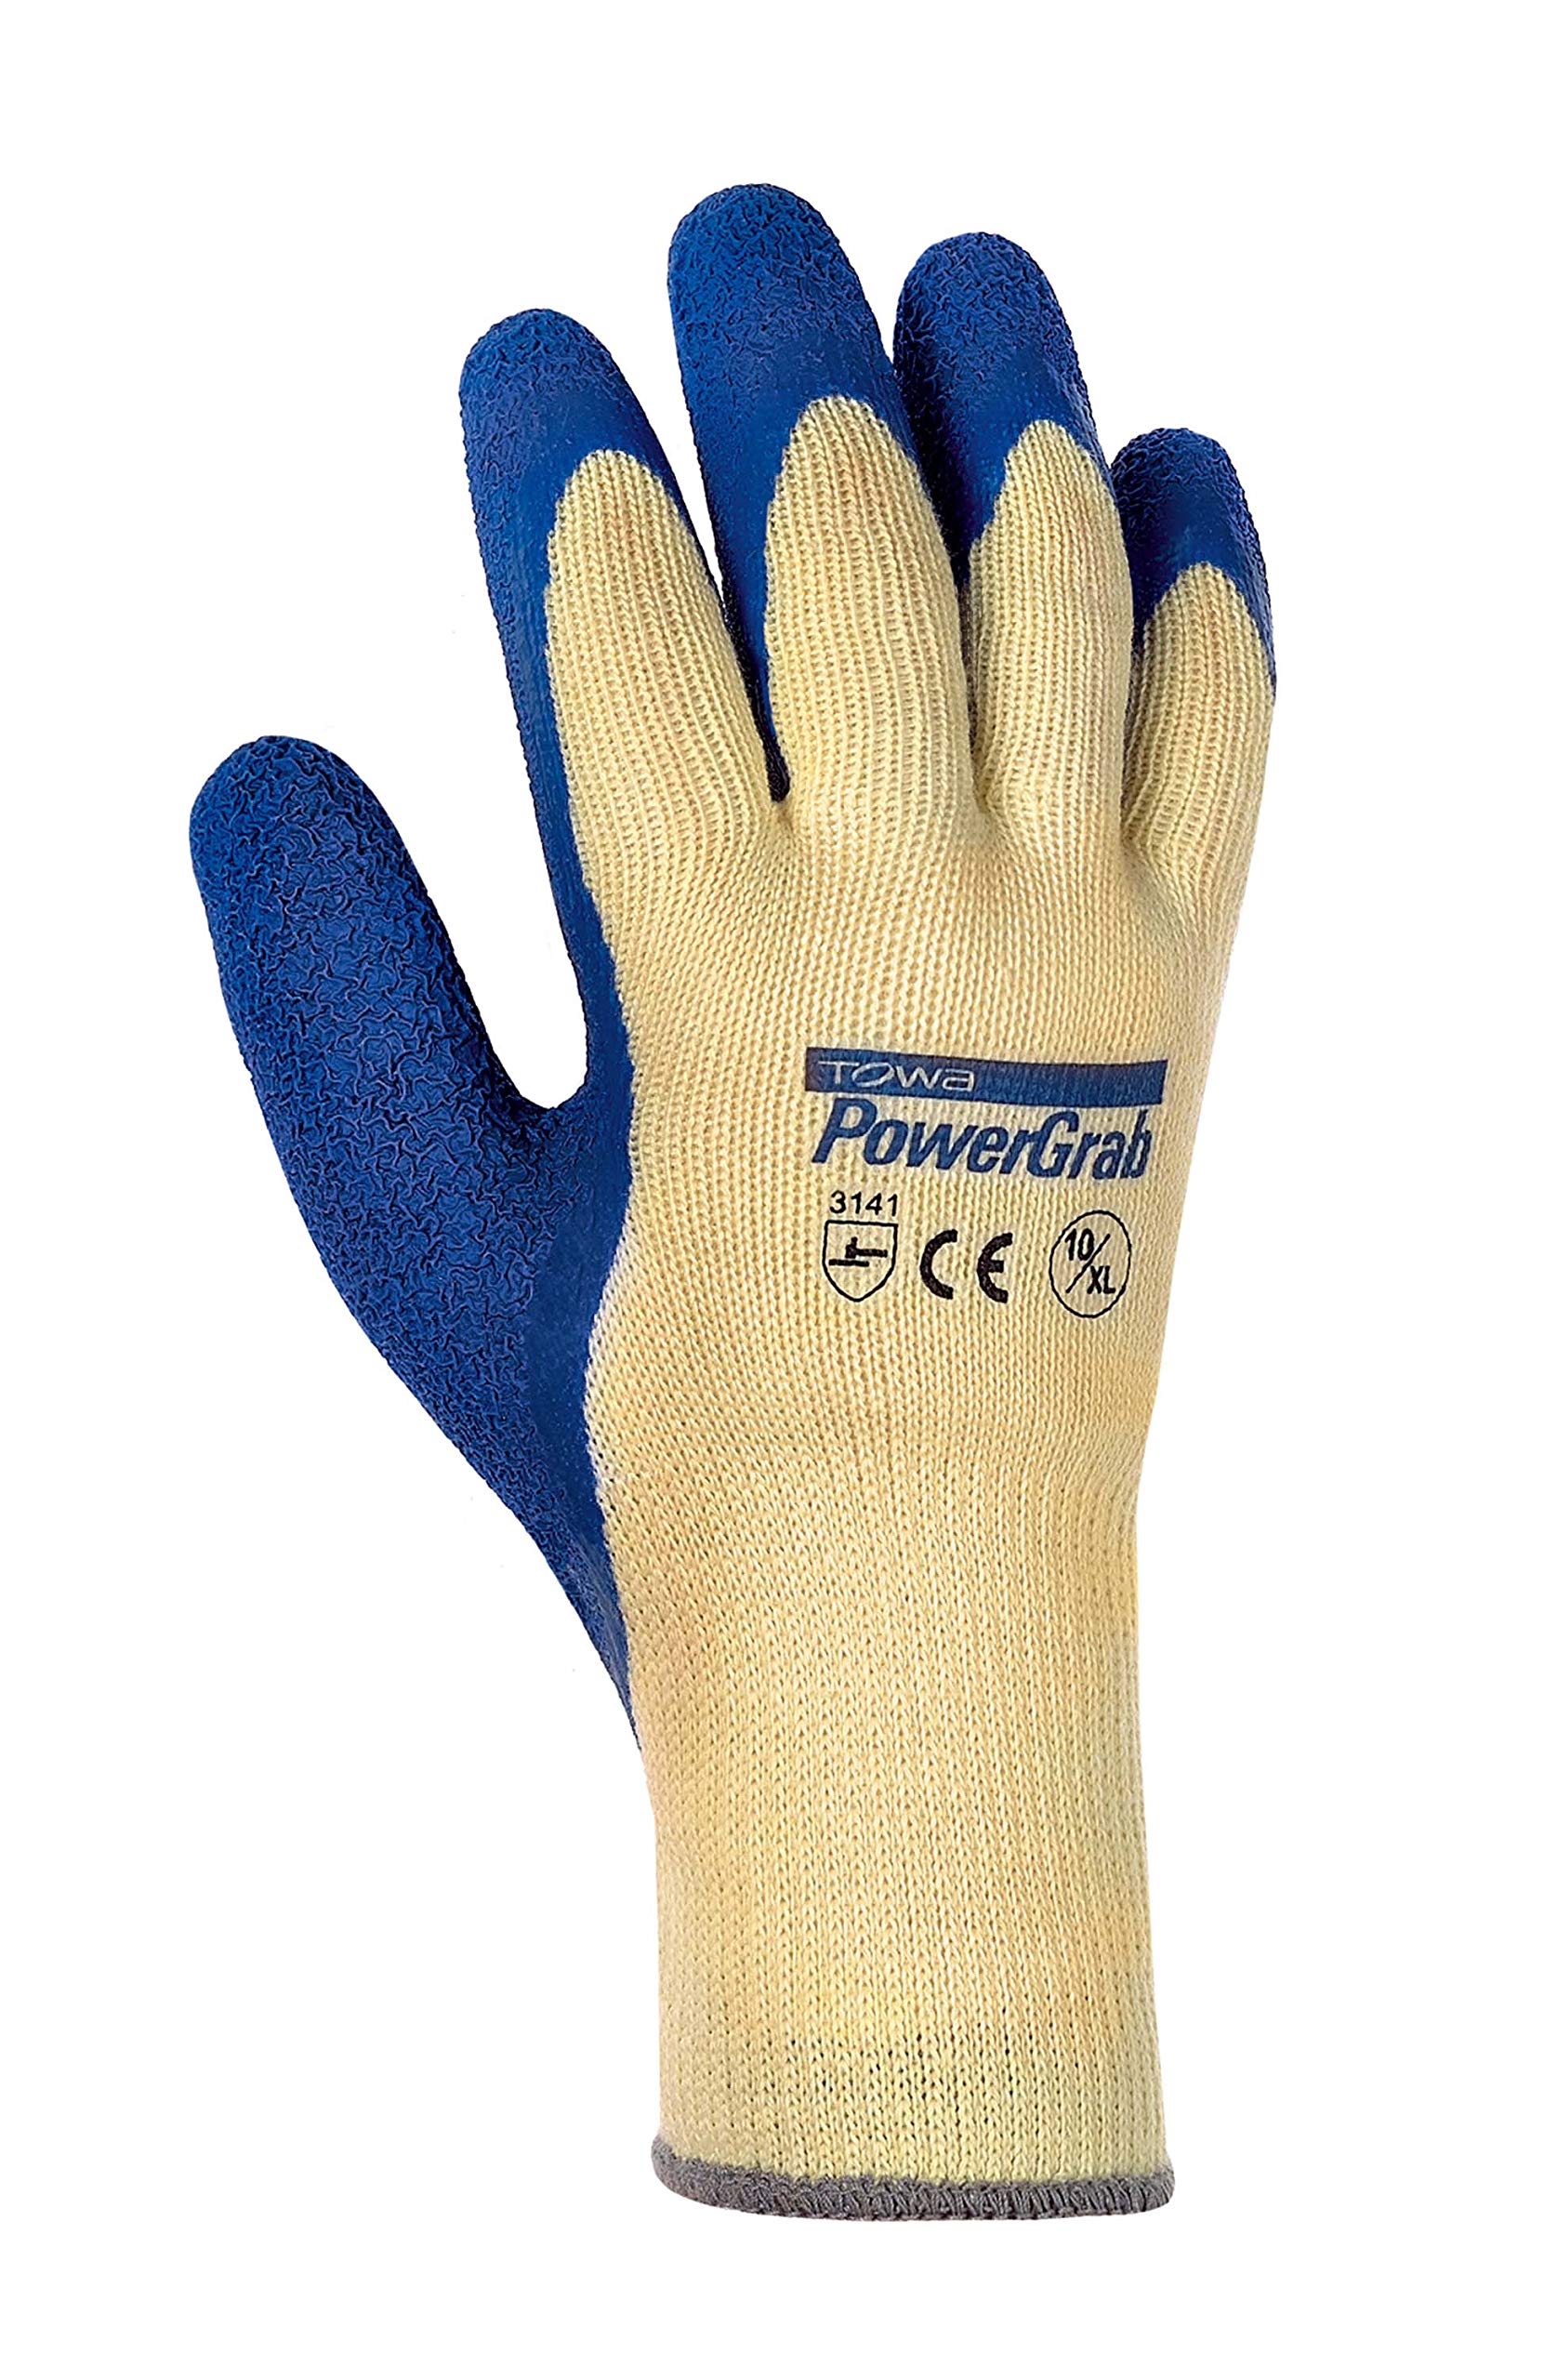 (12 Paar) TOWA Handschuhe Baumwoll-/Polyester-Strickhandschuhe PowerGrab 12 x Natur/blau 7(S)